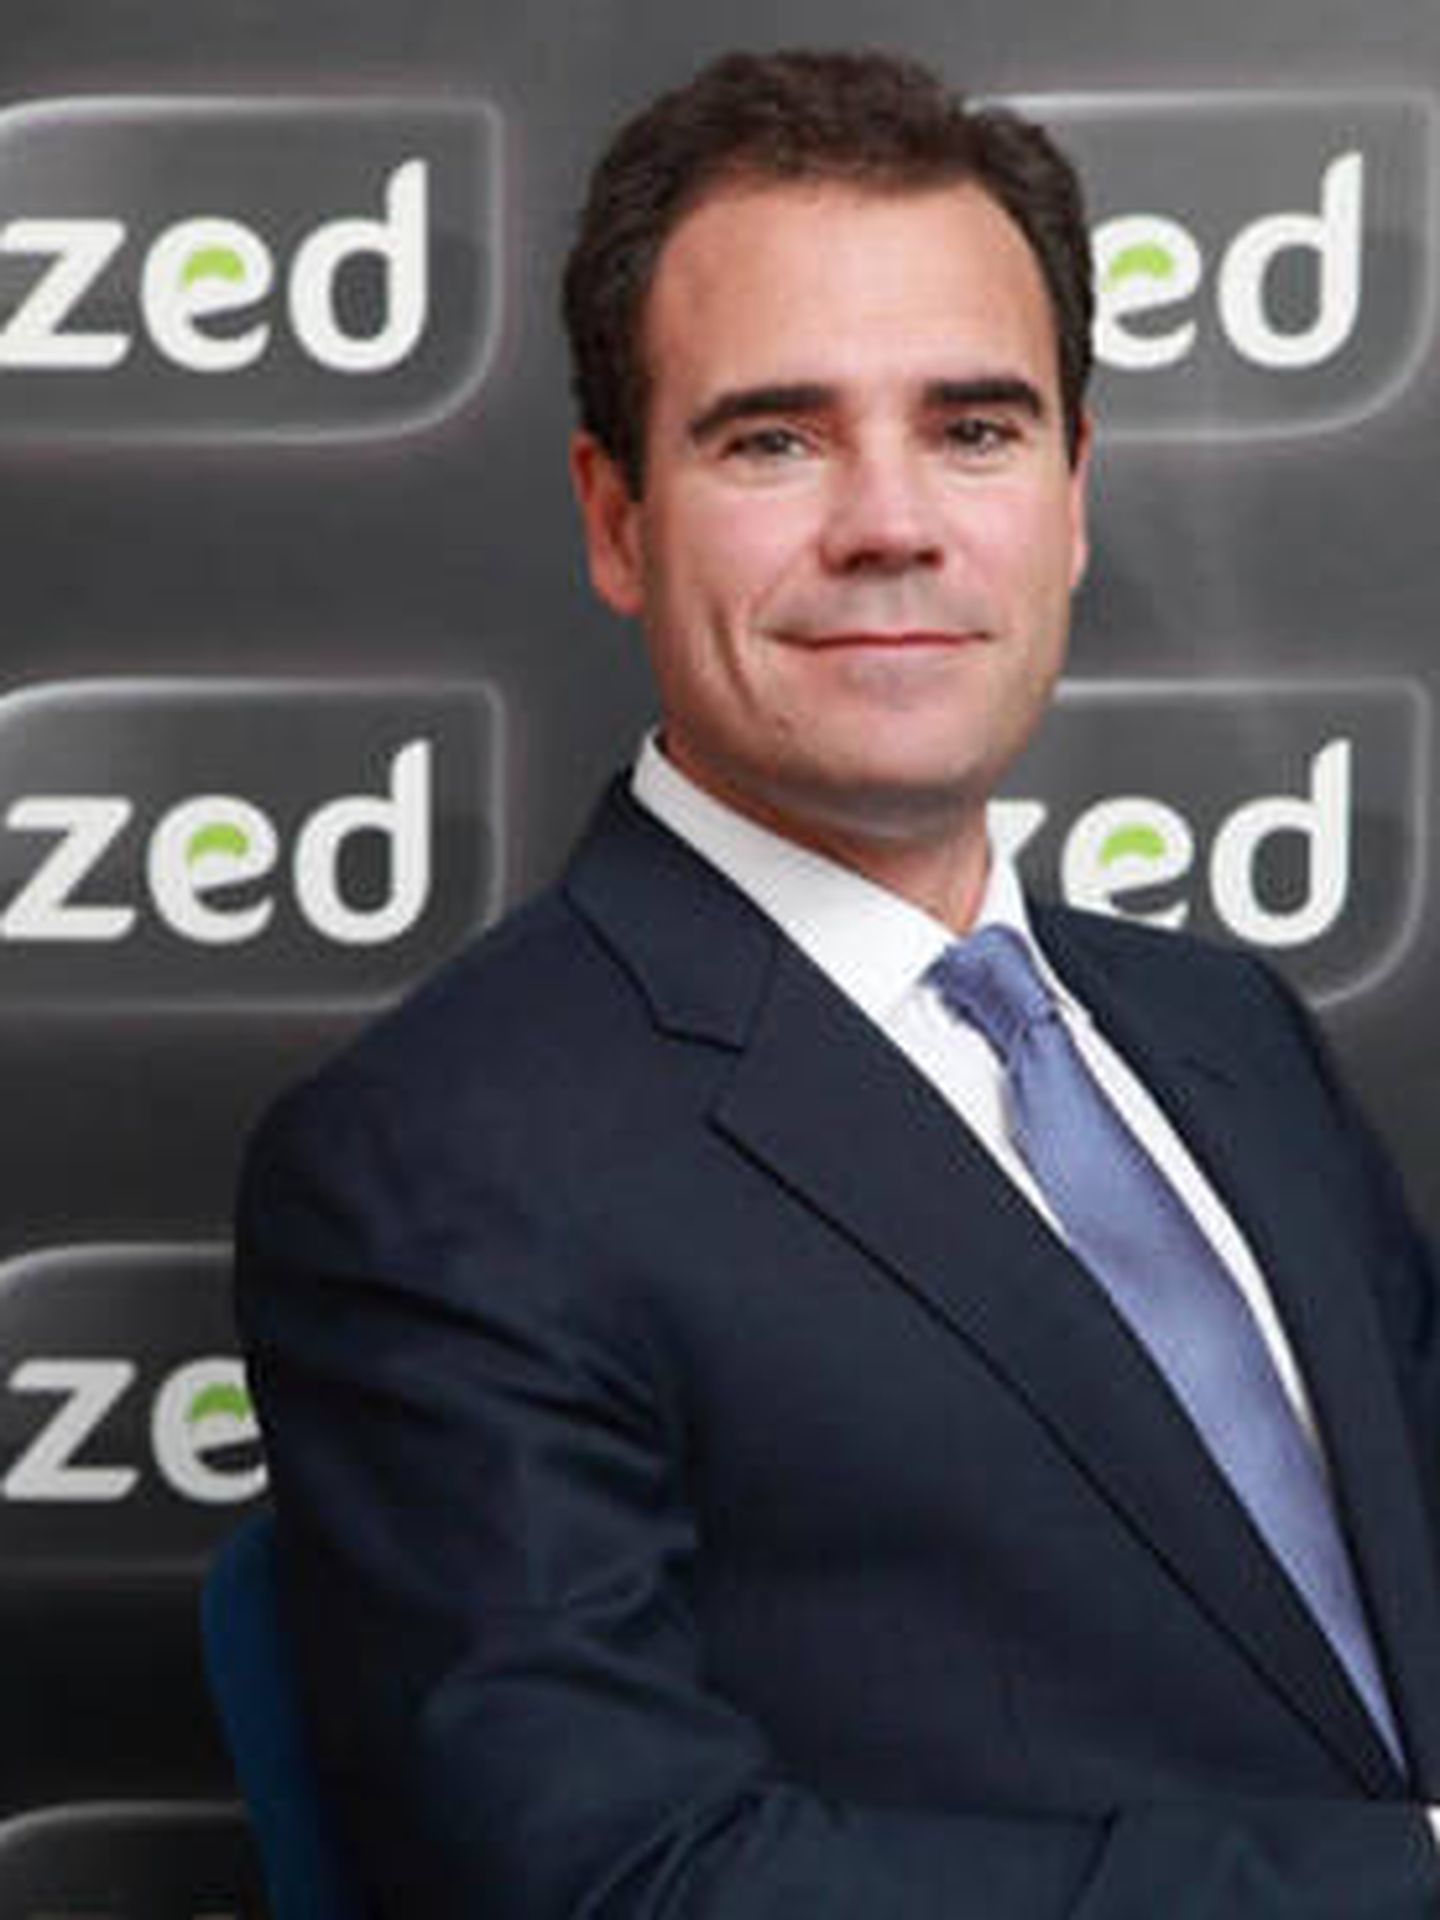 Javier Pérez Dolset. (Grupo Zed)